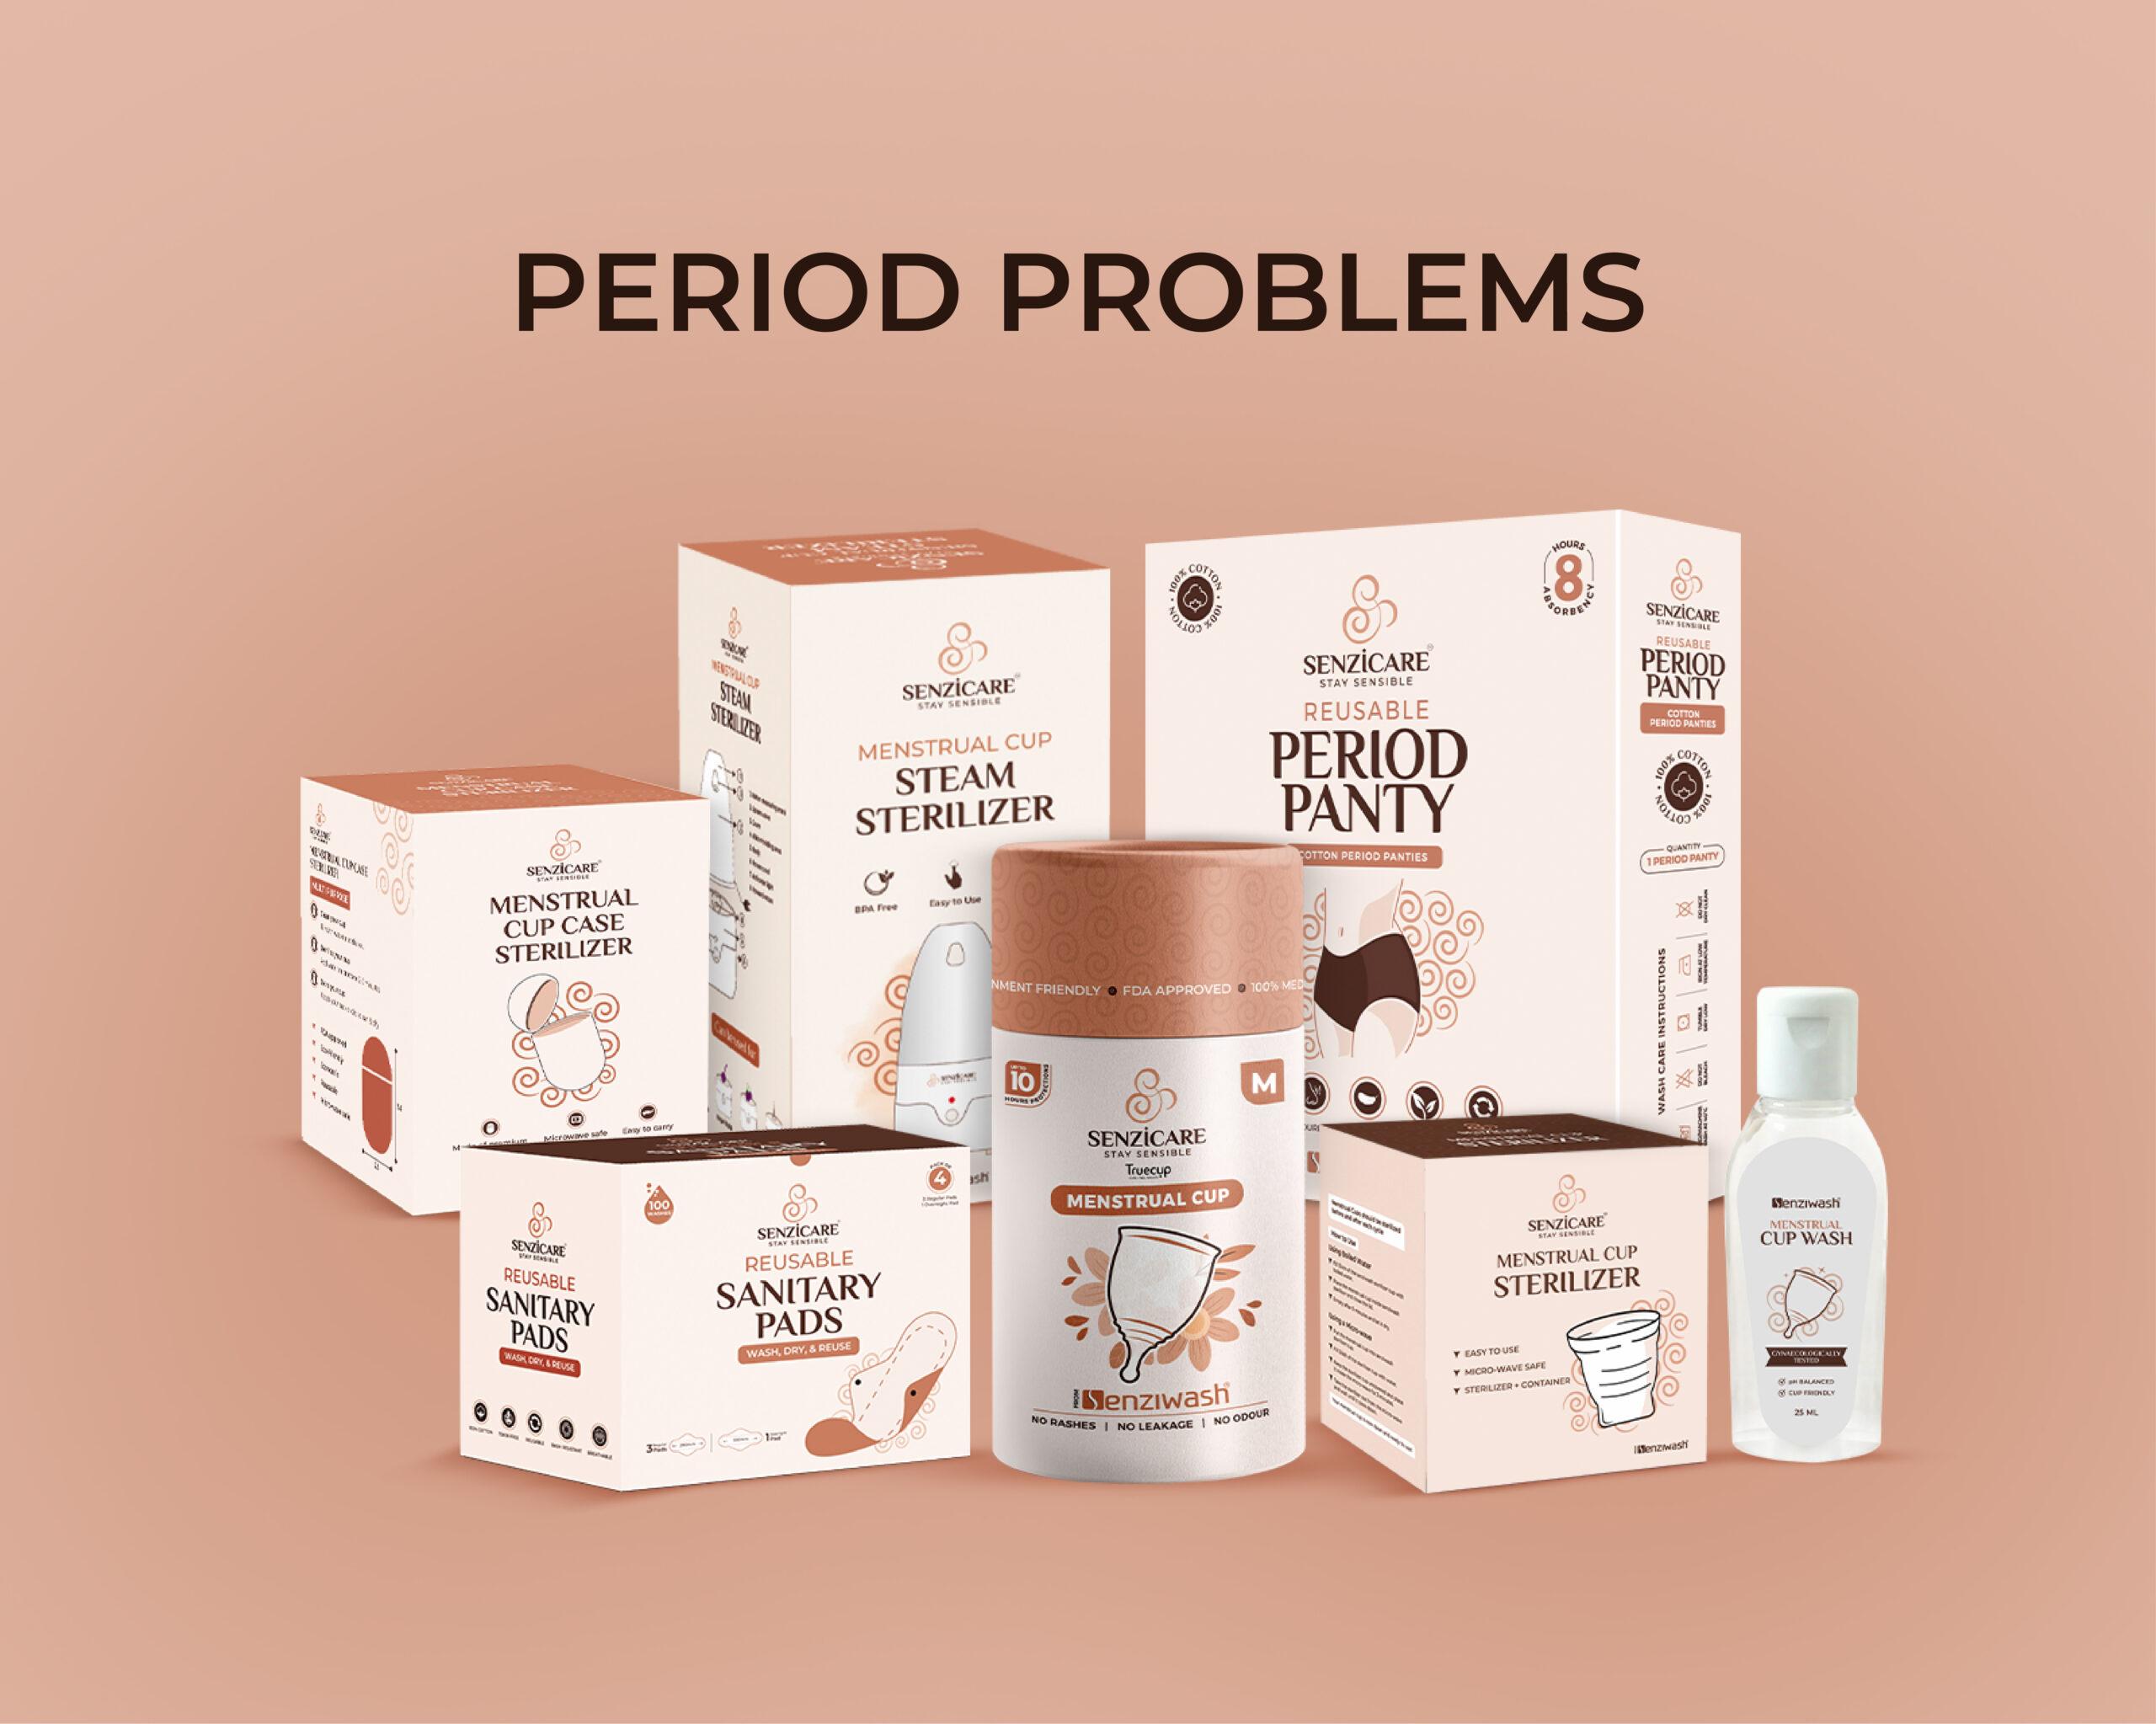 Senzicare Reusable Leak-Proof Period Panty(M)& Herbal Panty Liners